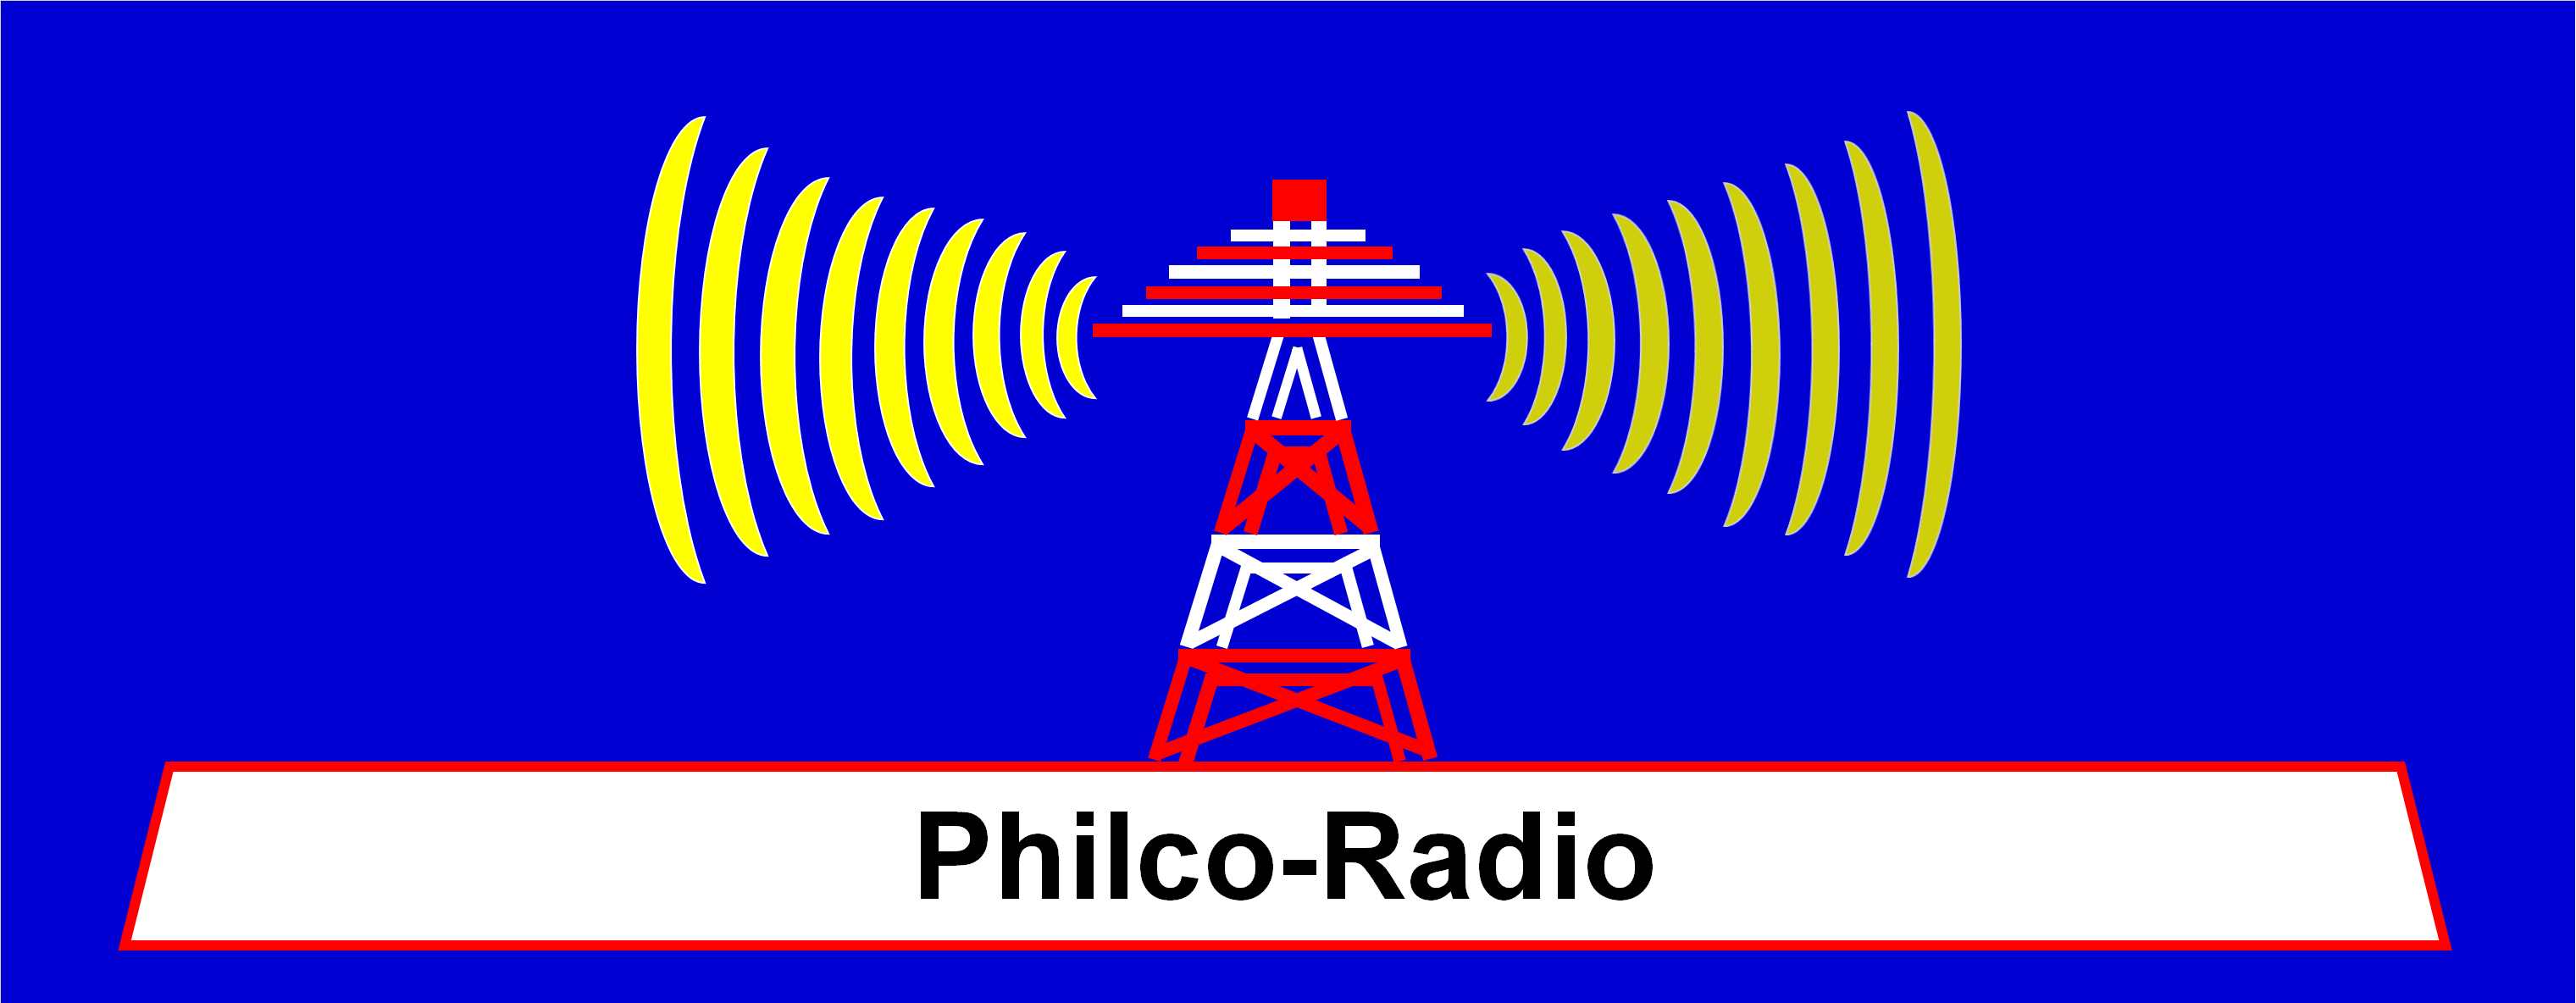 Philco-Radio